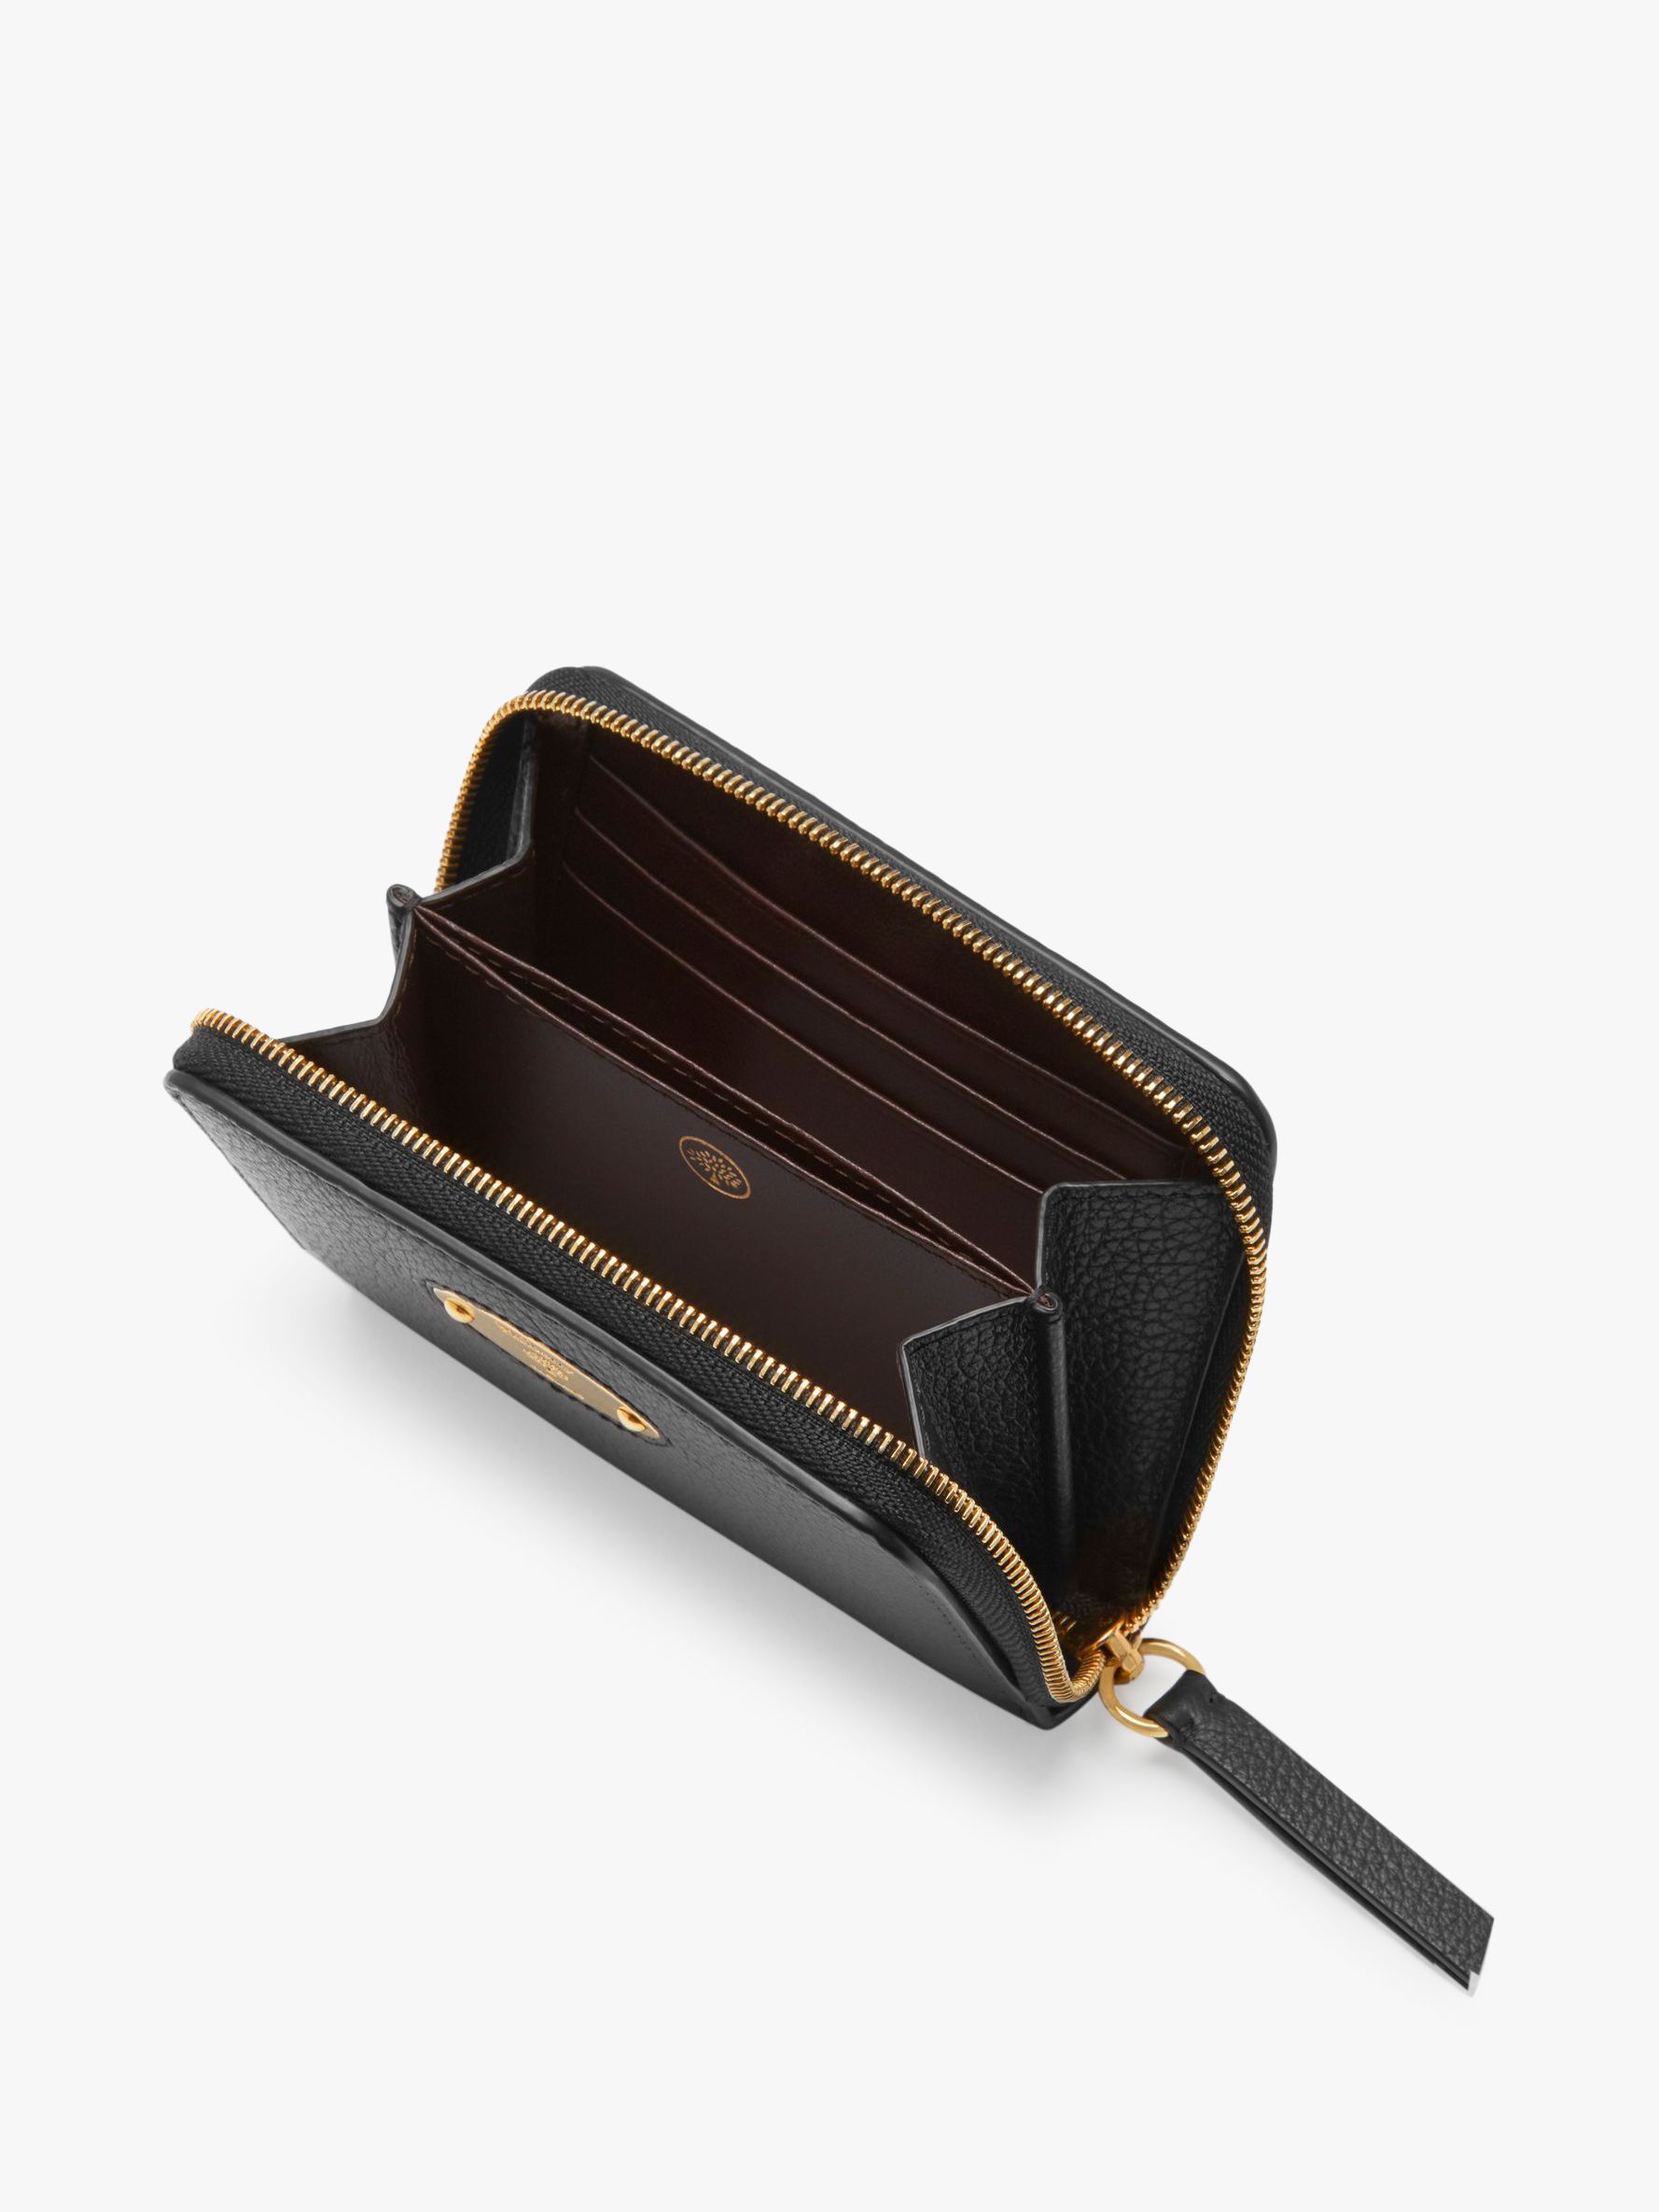 Mulberry Plaque Classic Grain Leather Small Zip Around Purse, Black